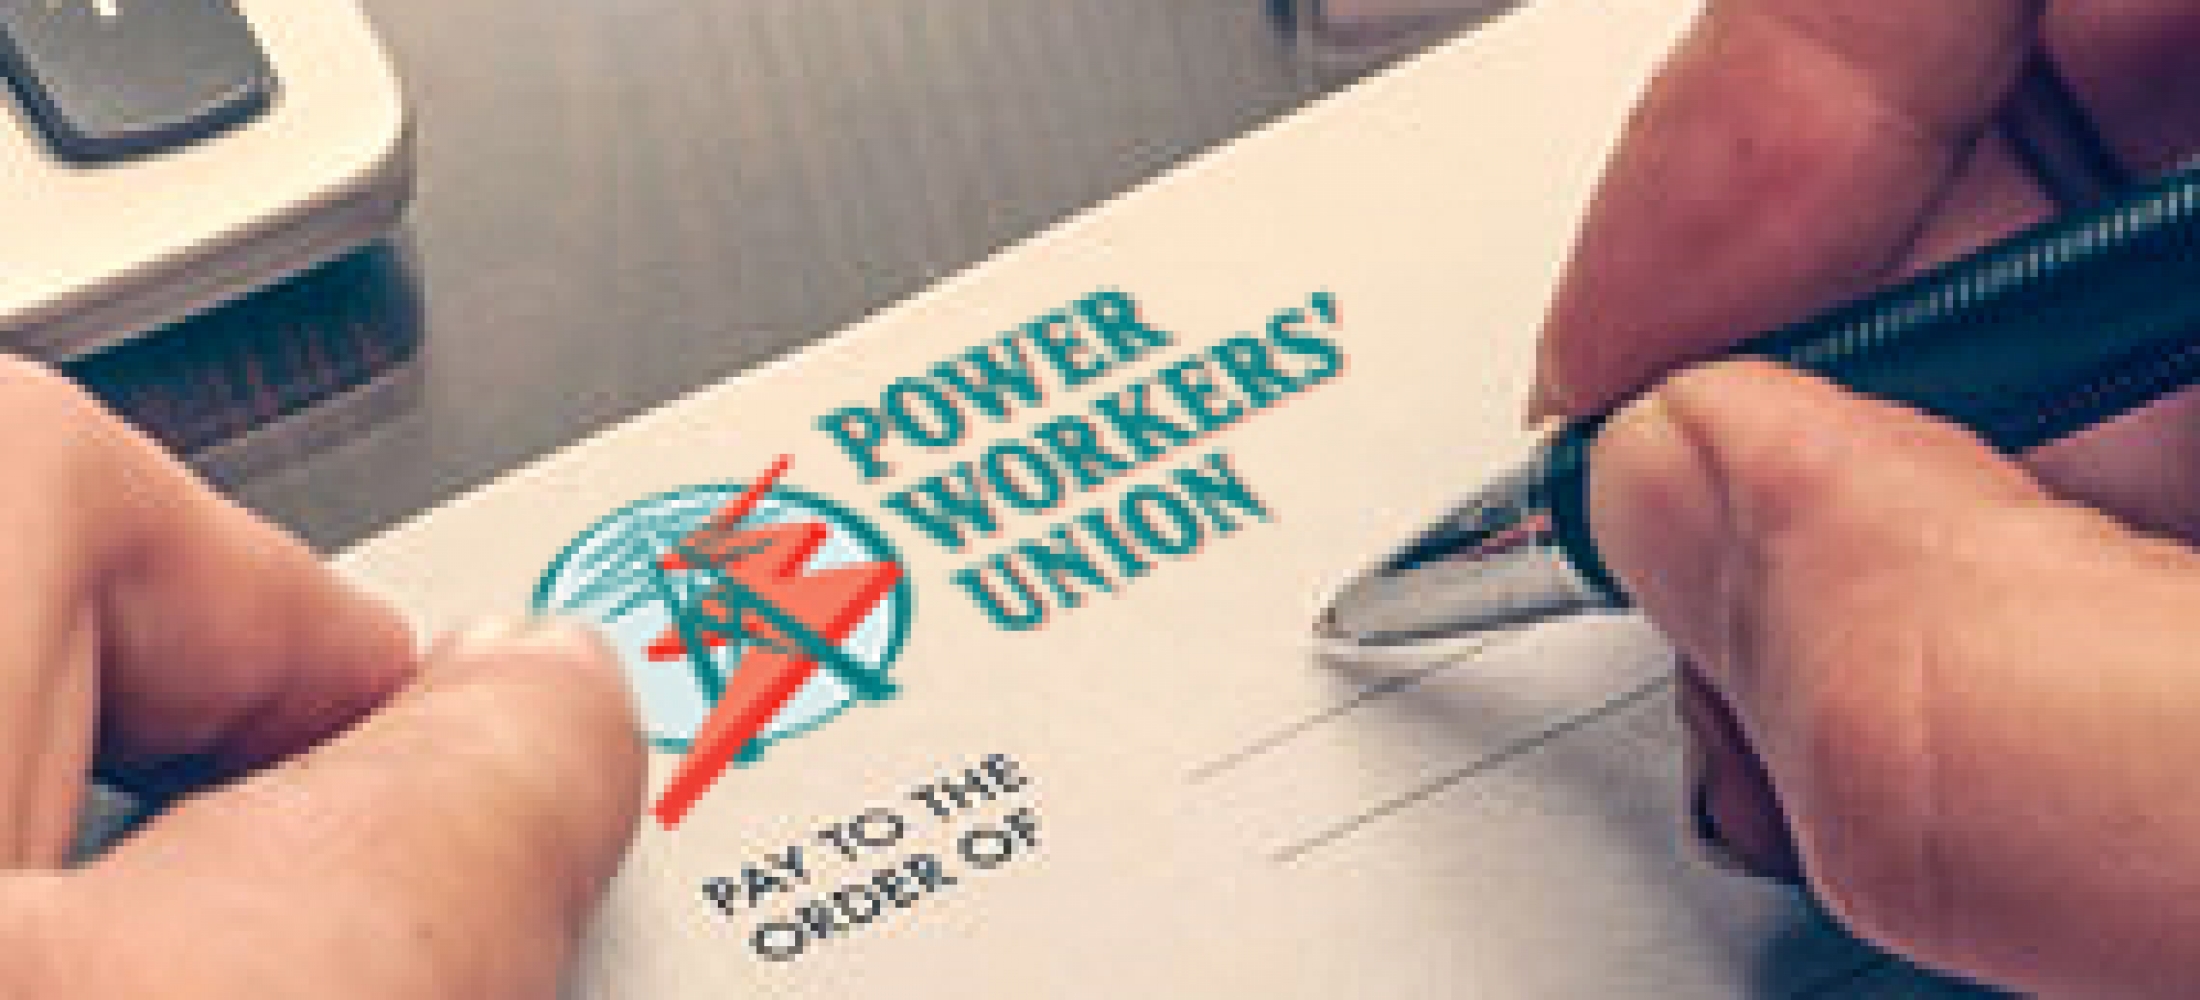 unionduesimage Power Workers' Union